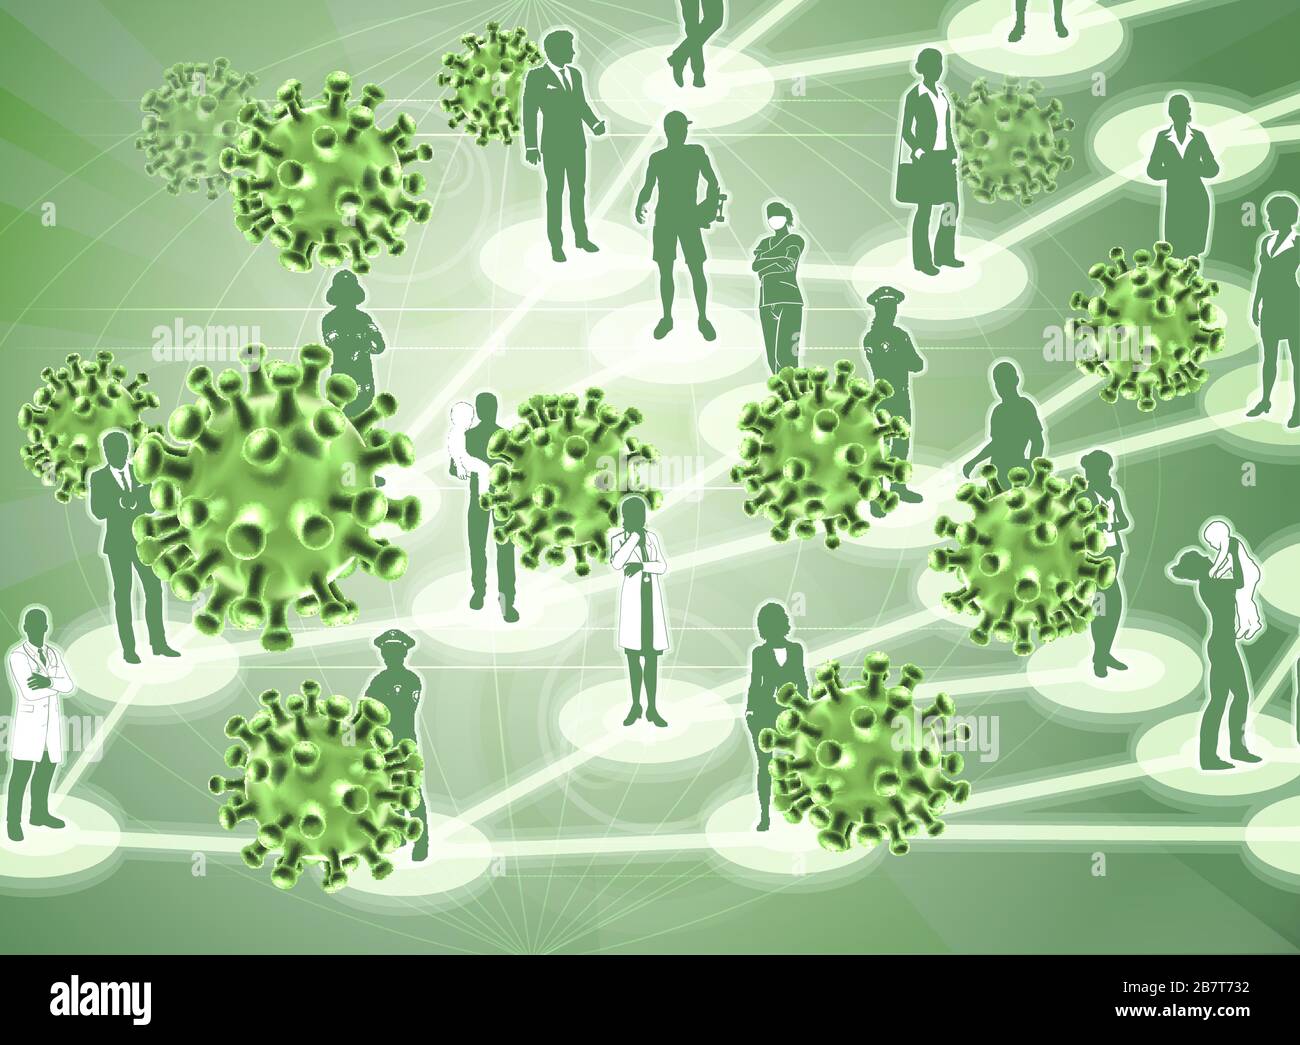 Viruszellen Virale Verbreitung Pandemie Menschen Konzept Stock Vektor